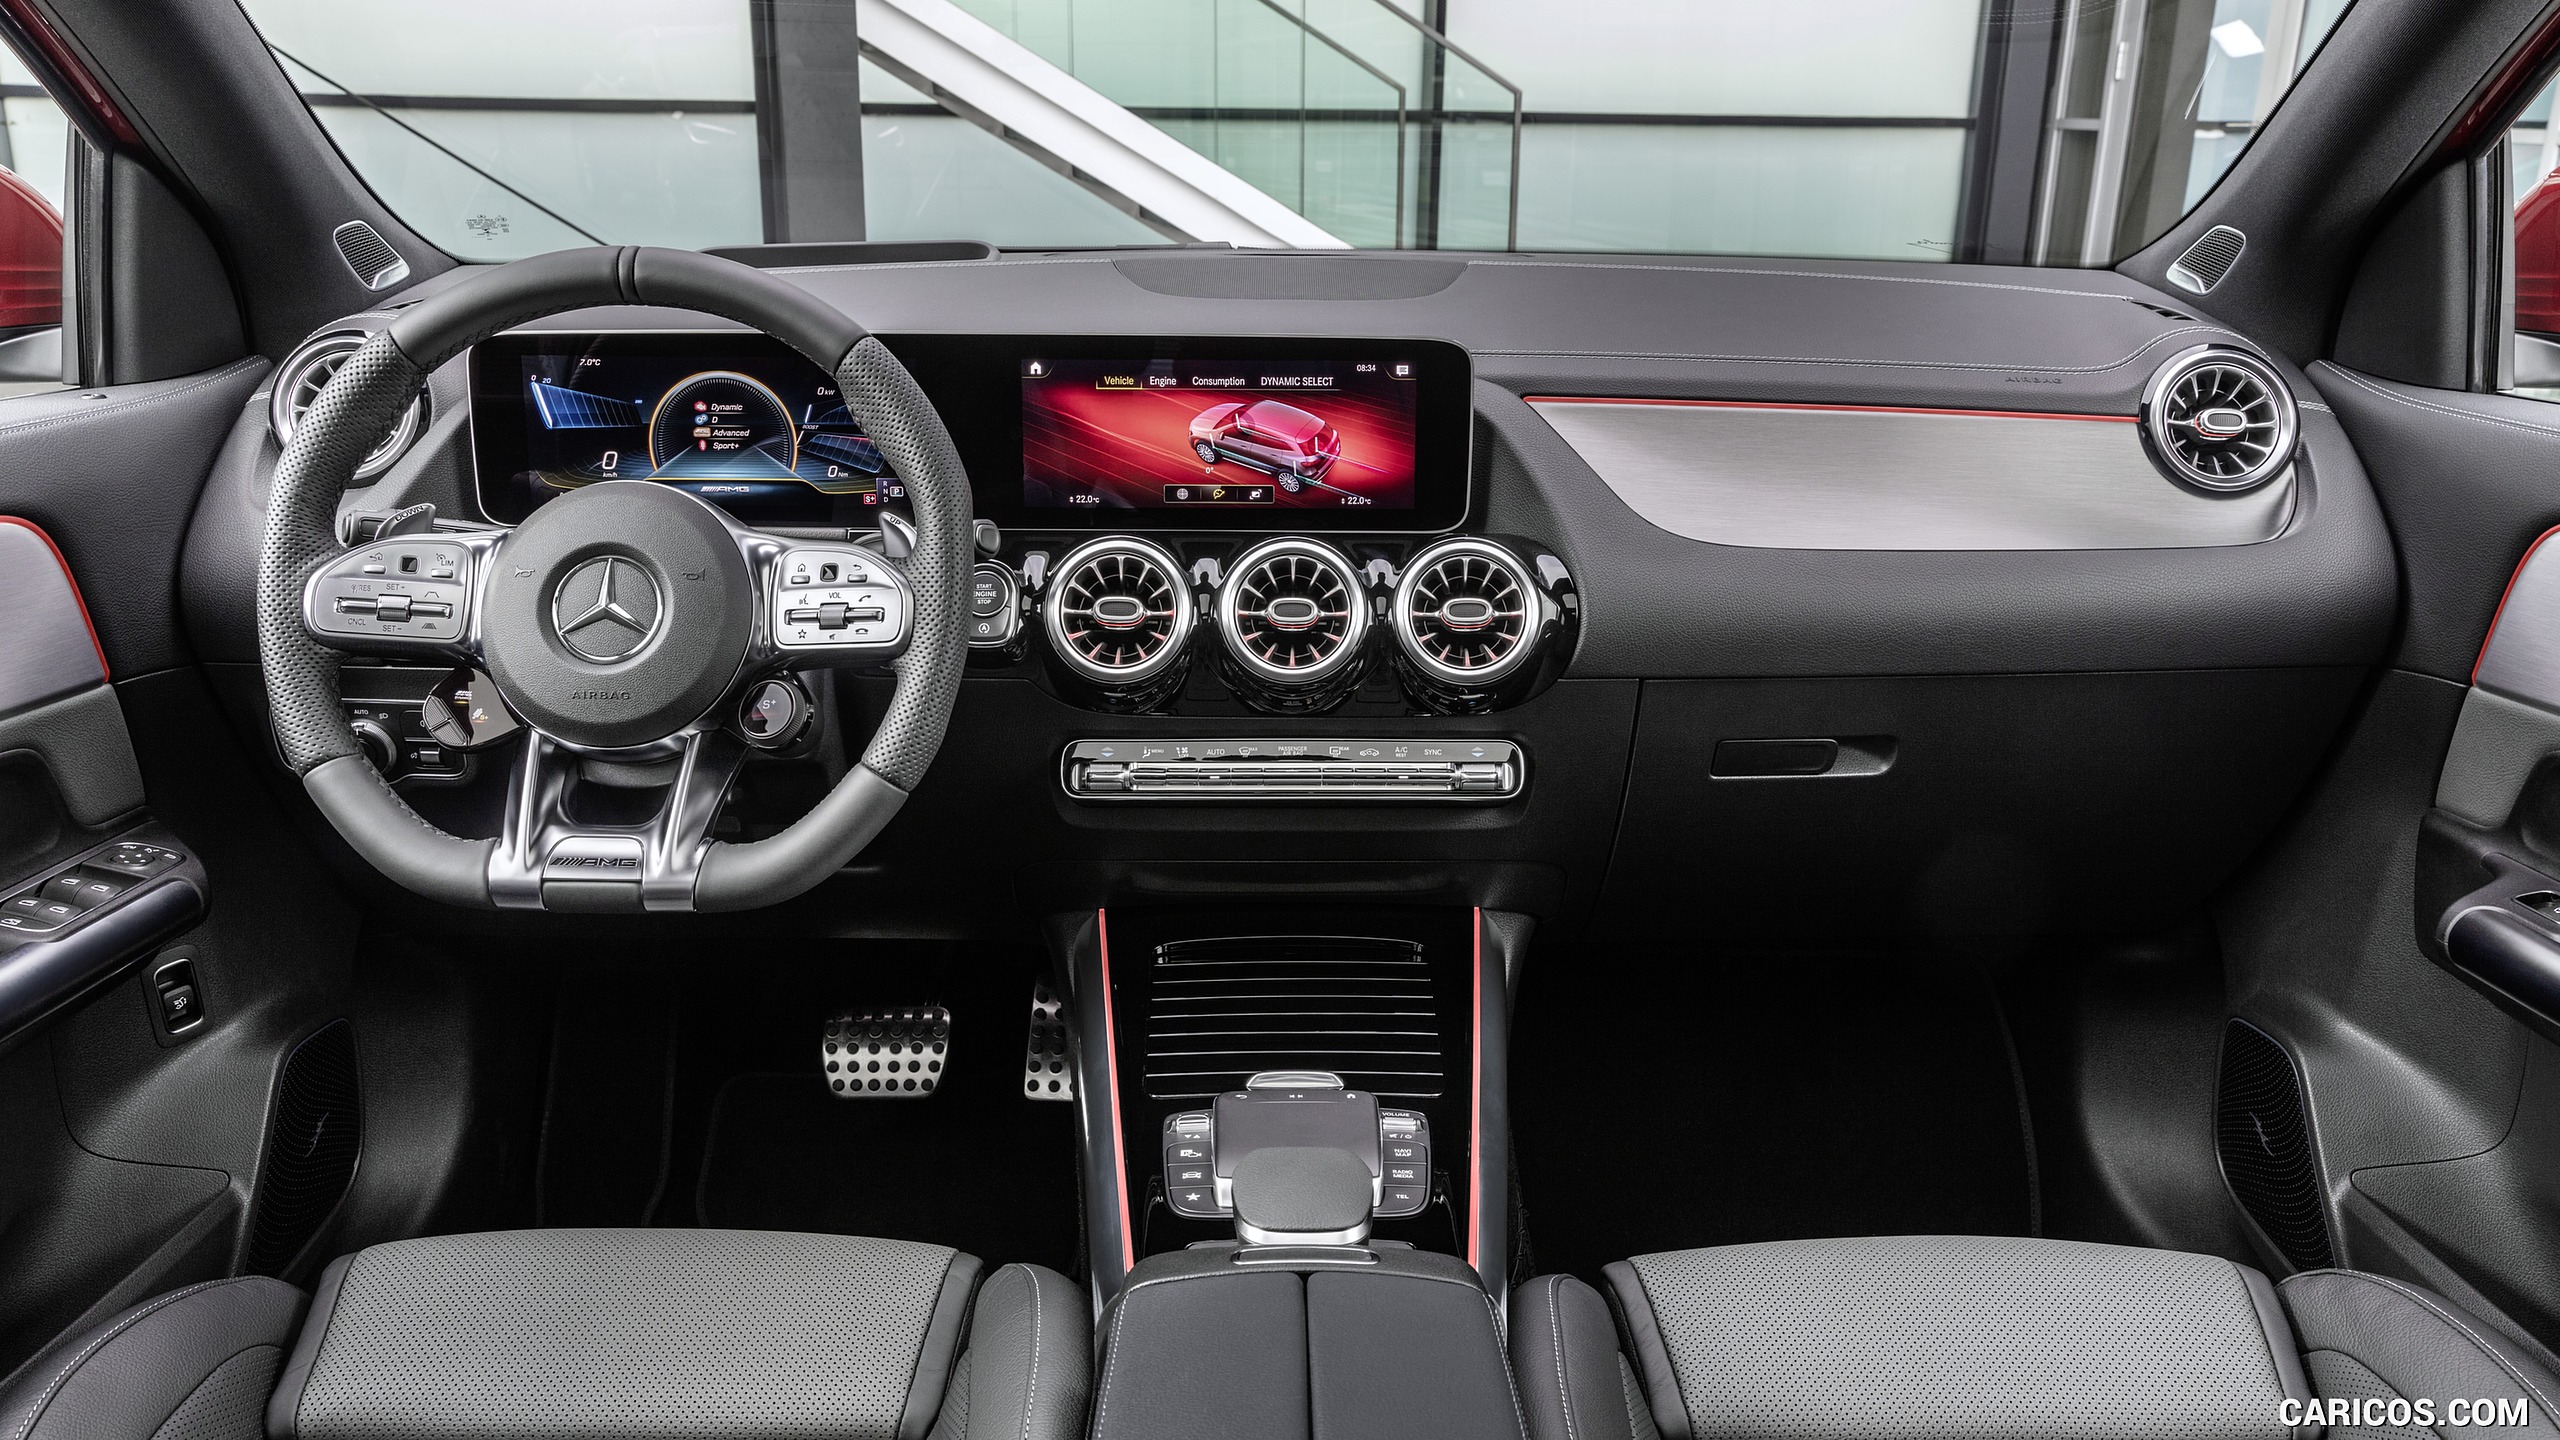 2021 Mercedes-AMG GLA 35 4MATIC - Interior, Cockpit, #21 of 104